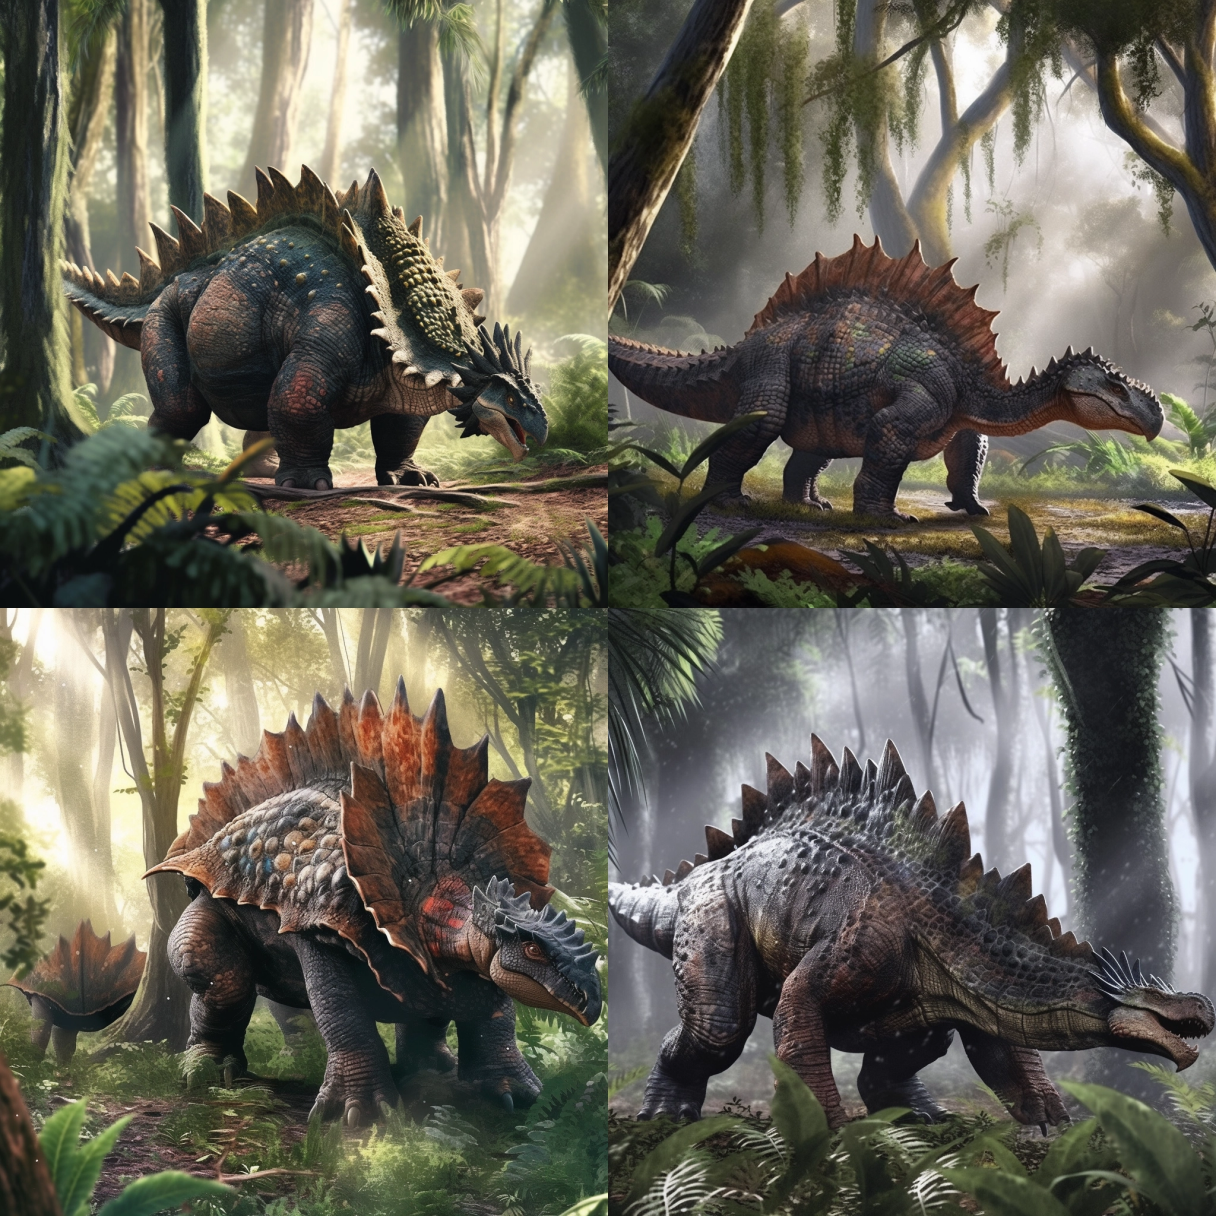 Stegasaurus: The Plated Herbivore